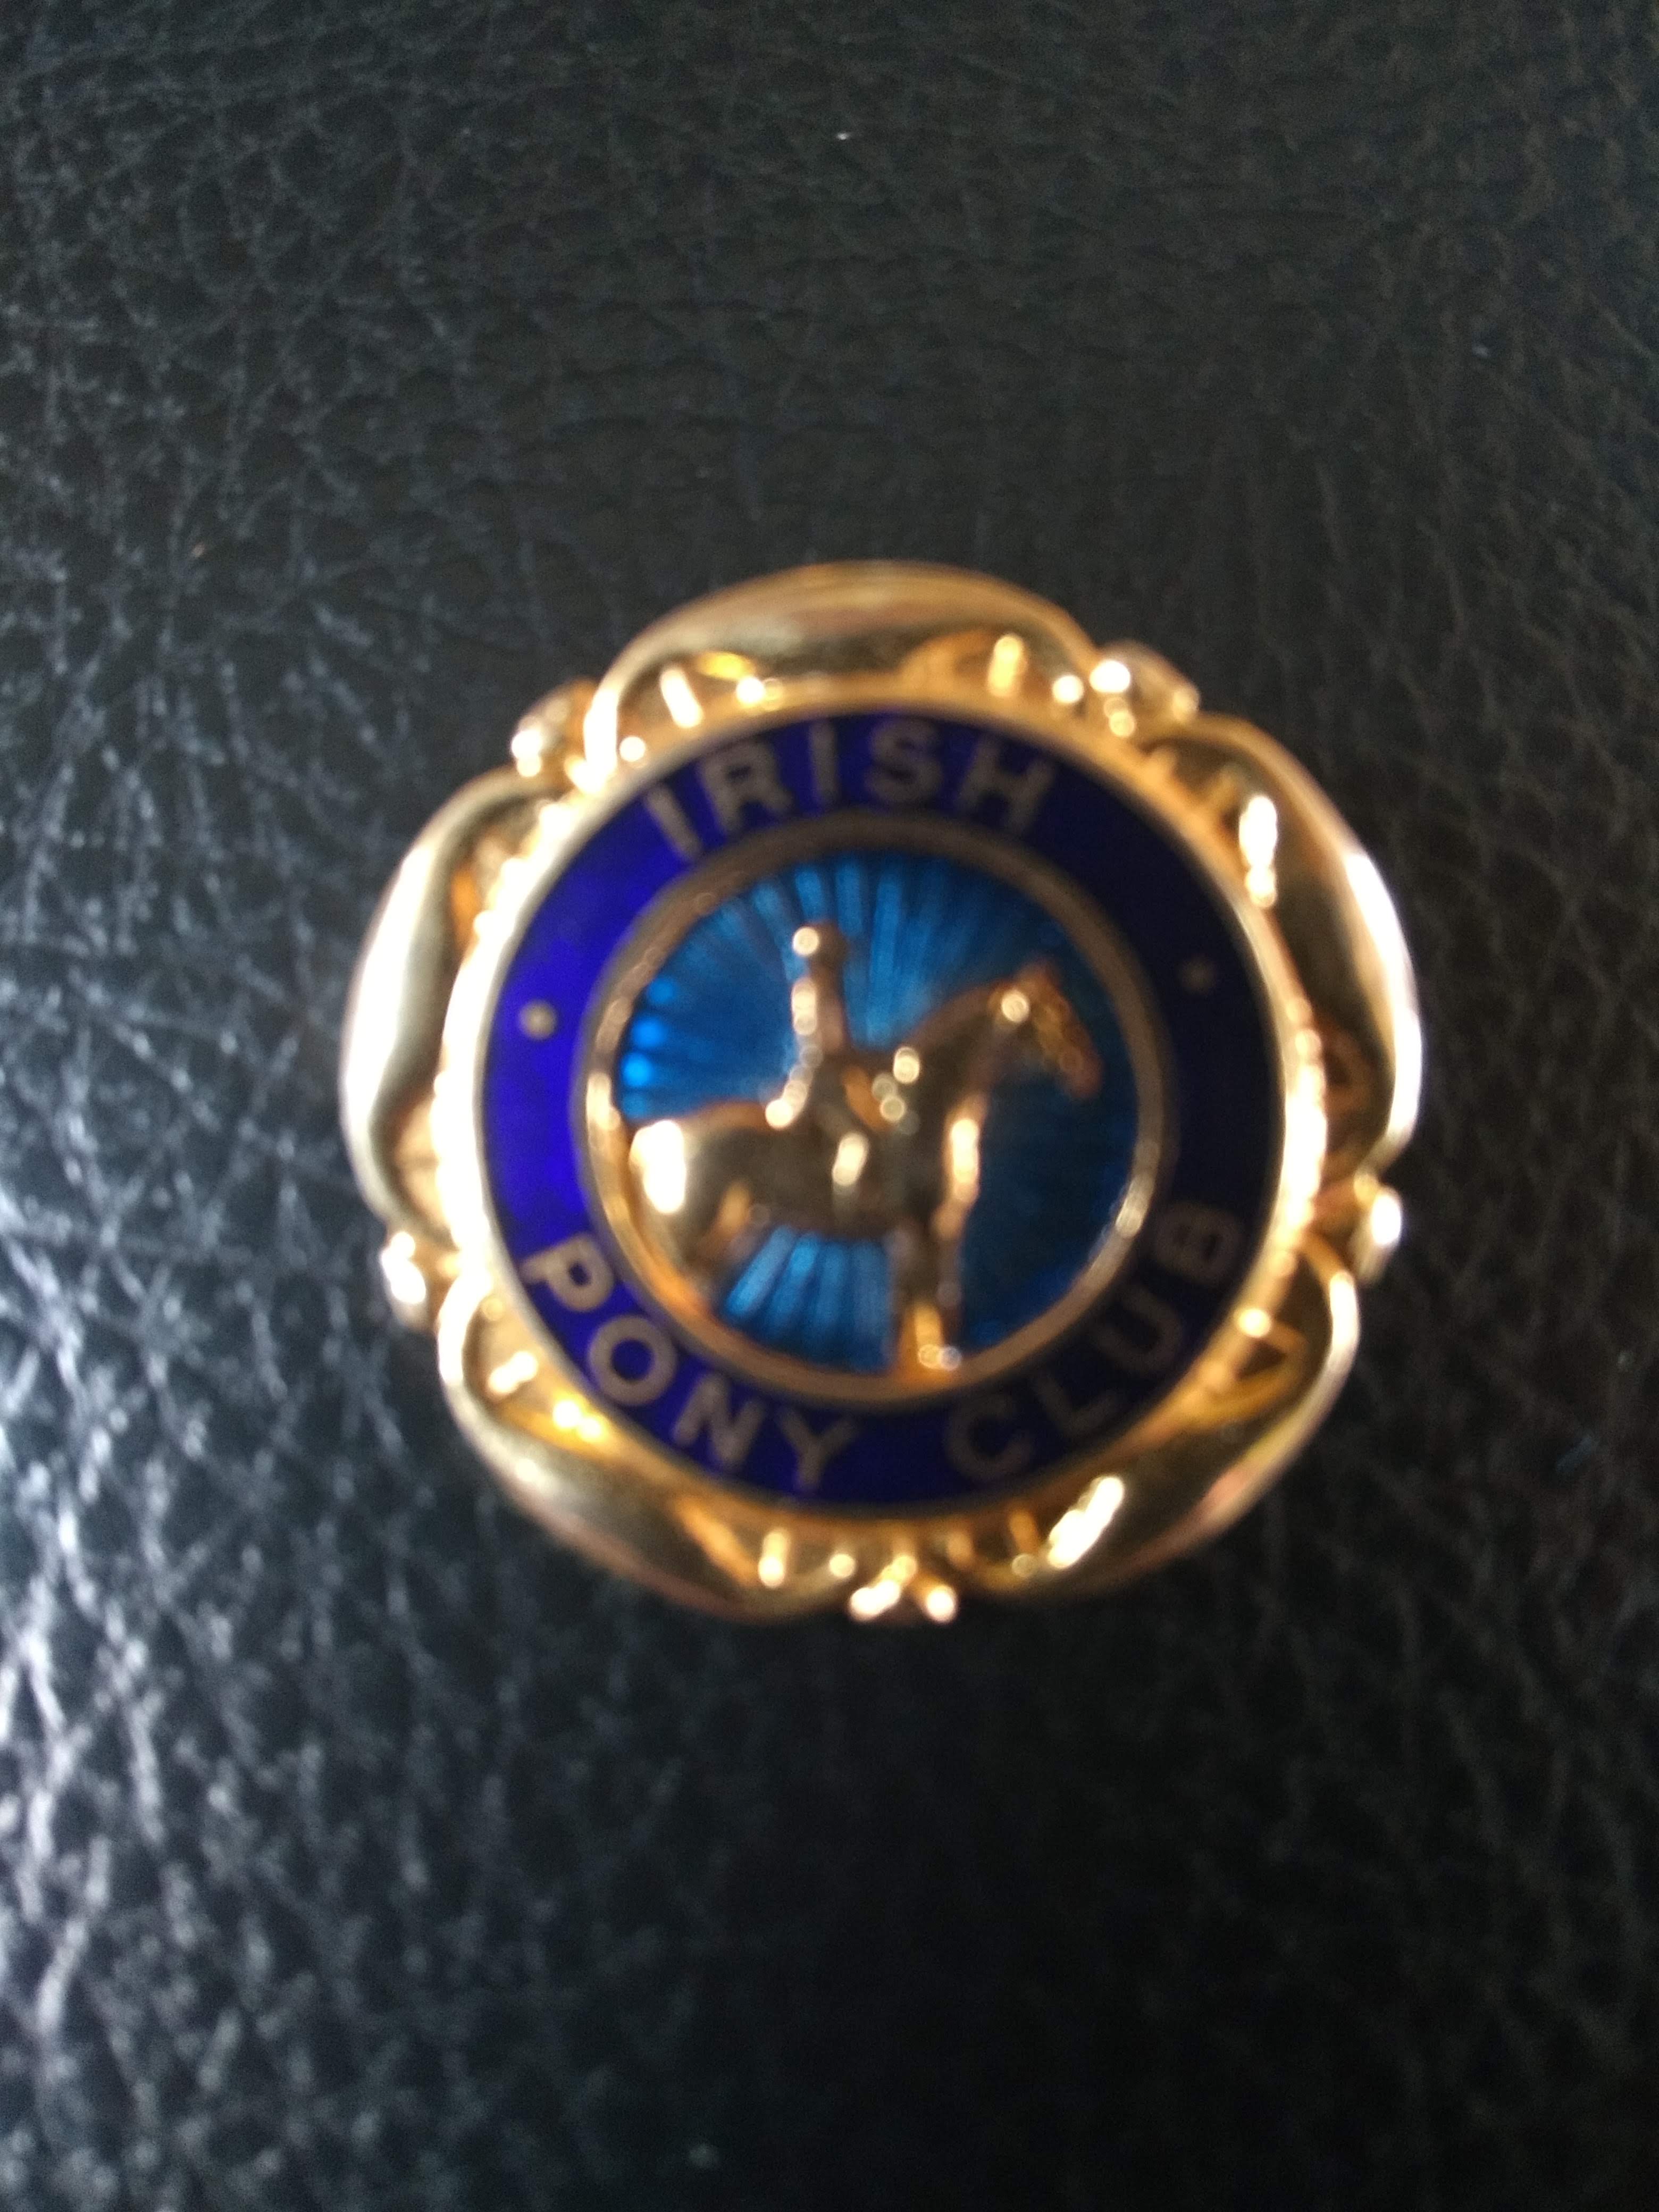 Pony club badge